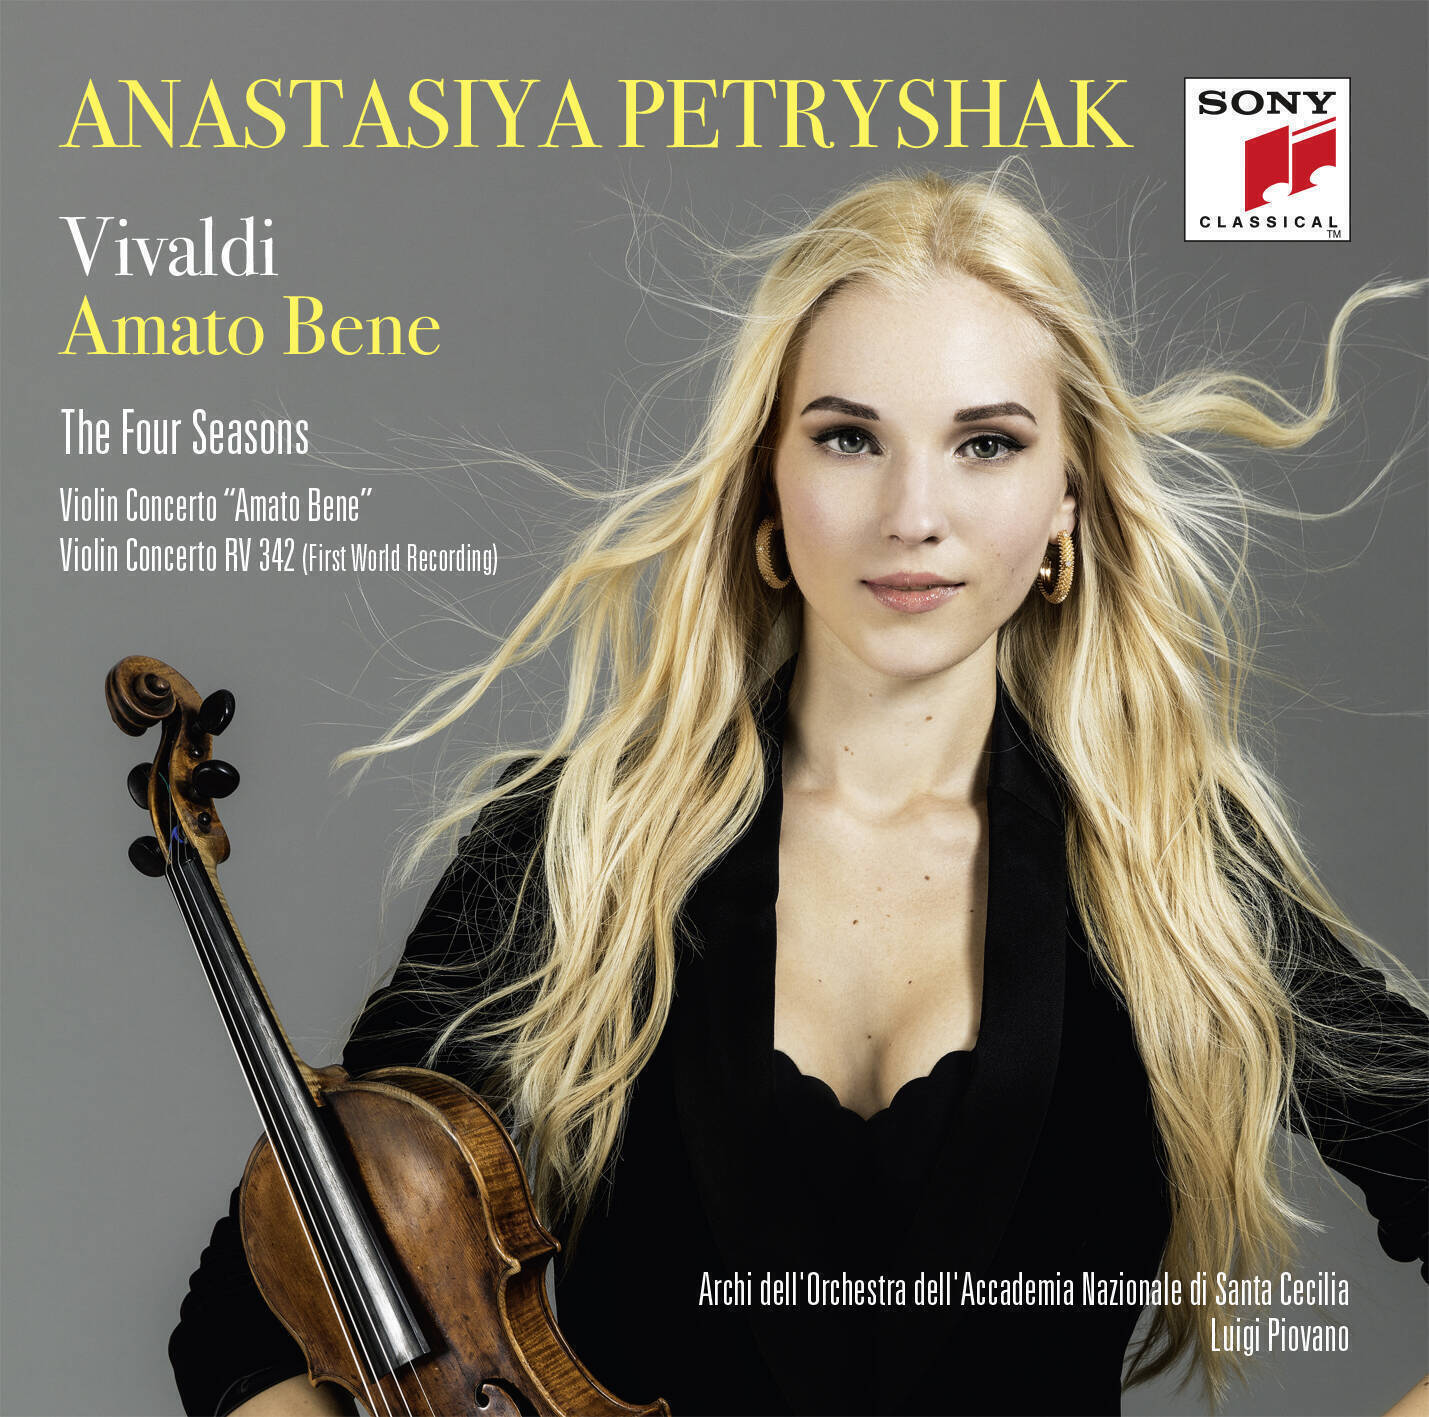 Anastasiya Petryshak Vivaldi Amato bene Cover